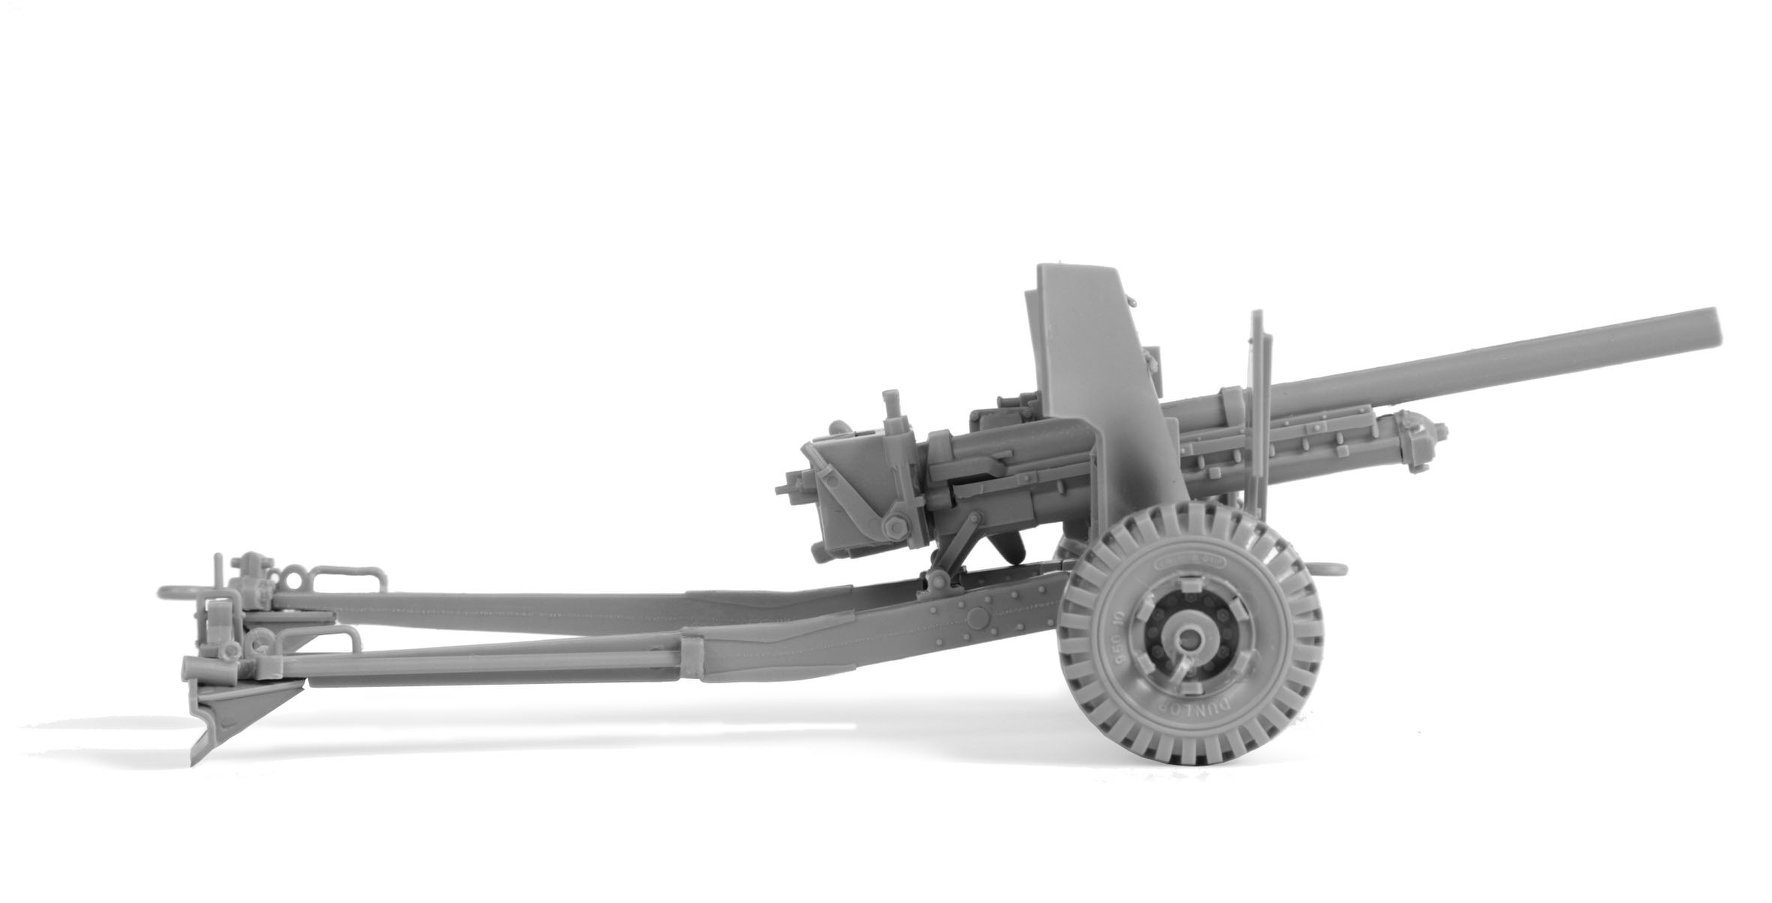 1/35 MK-II Британская 6-футовая противотанковая пушка 3518 (British anti-tank gun QF 6-PDR MK-II)